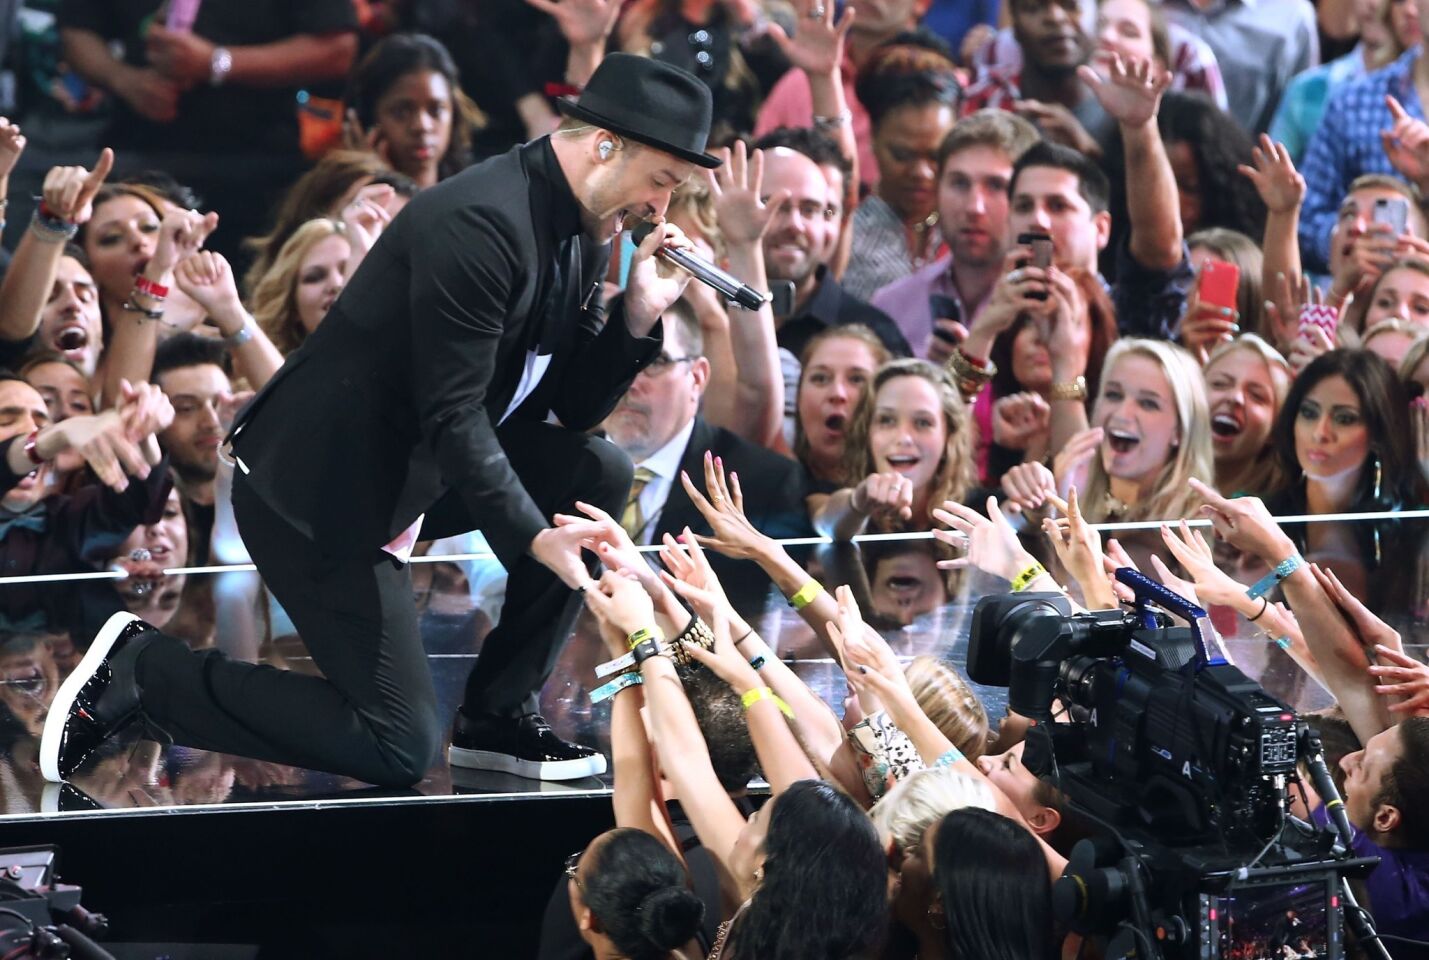 Justin Timberlake performs for his adoring fans.